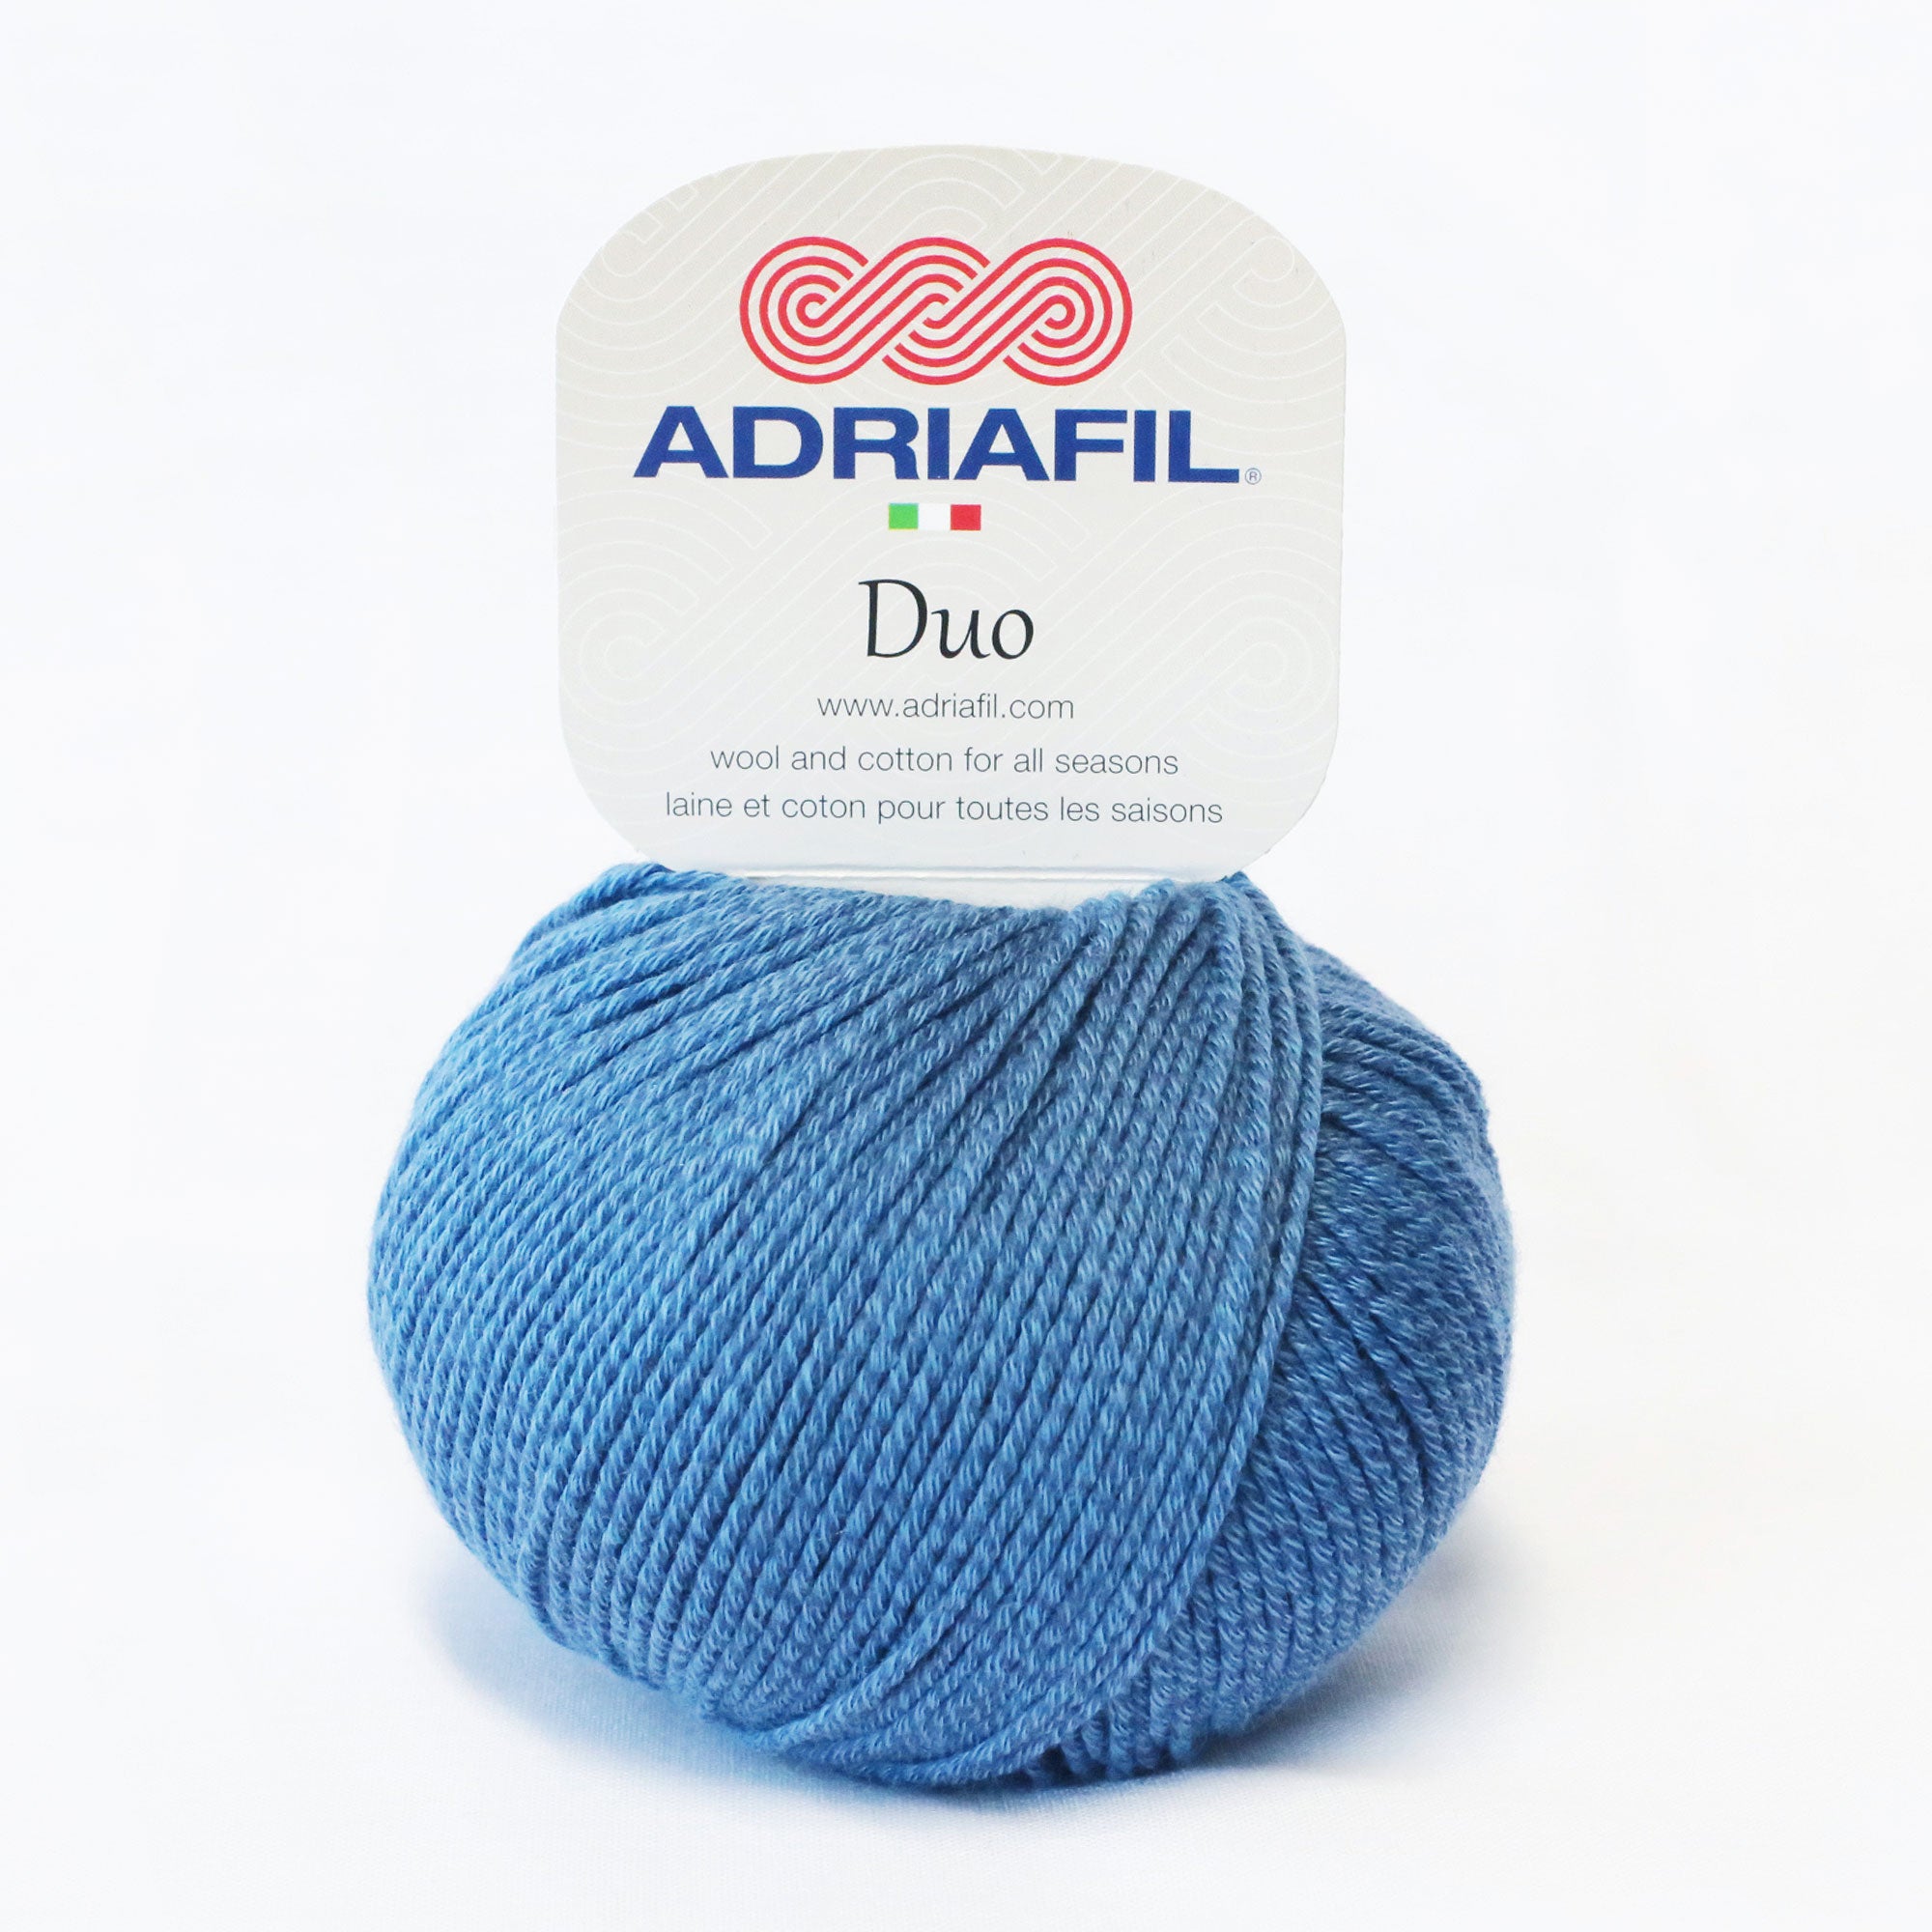 Adriafil Duo Comfort Extra Fine Merino & Egyptian Cotton DK - Aviator Blue 82